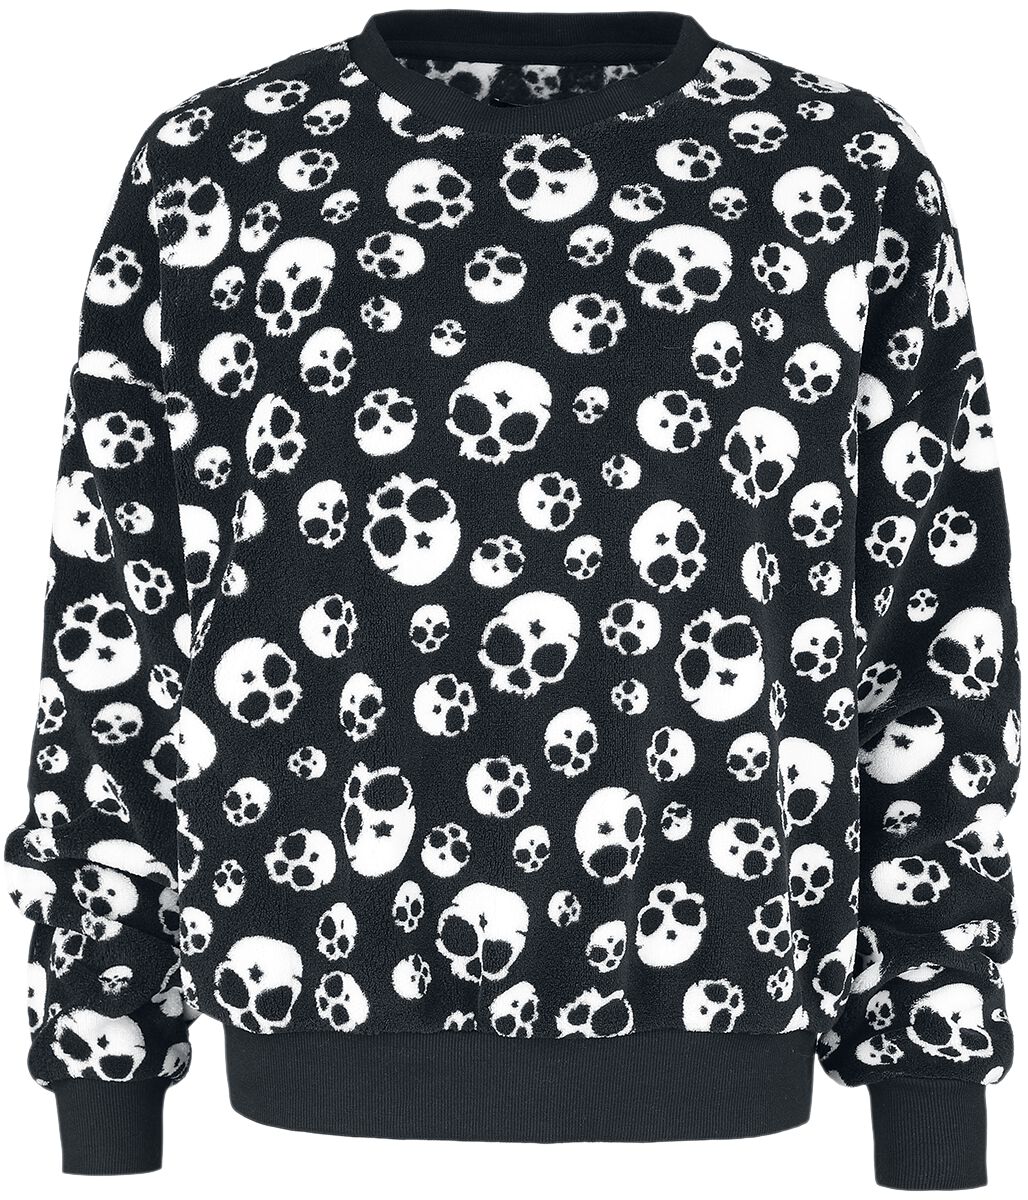 Full Volume by EMP Jumper with all-over skull print Sweatshirt black